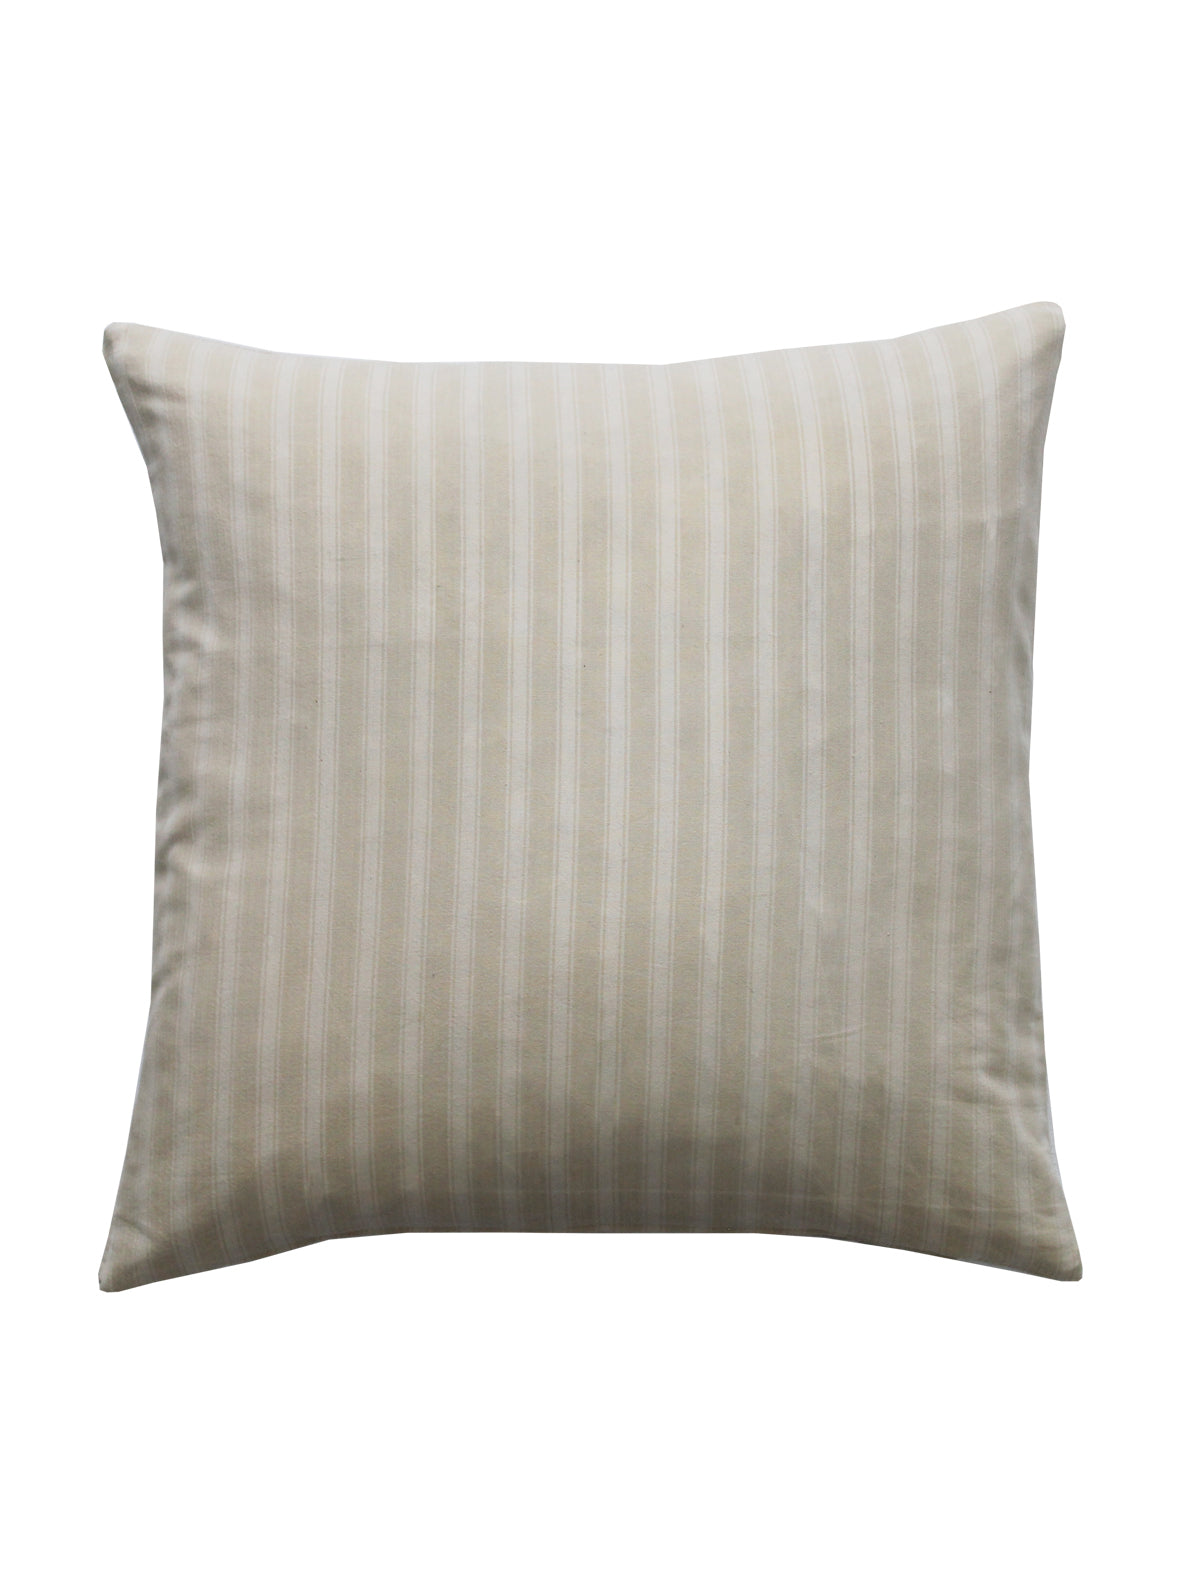 Cream Stripe Square Cushion